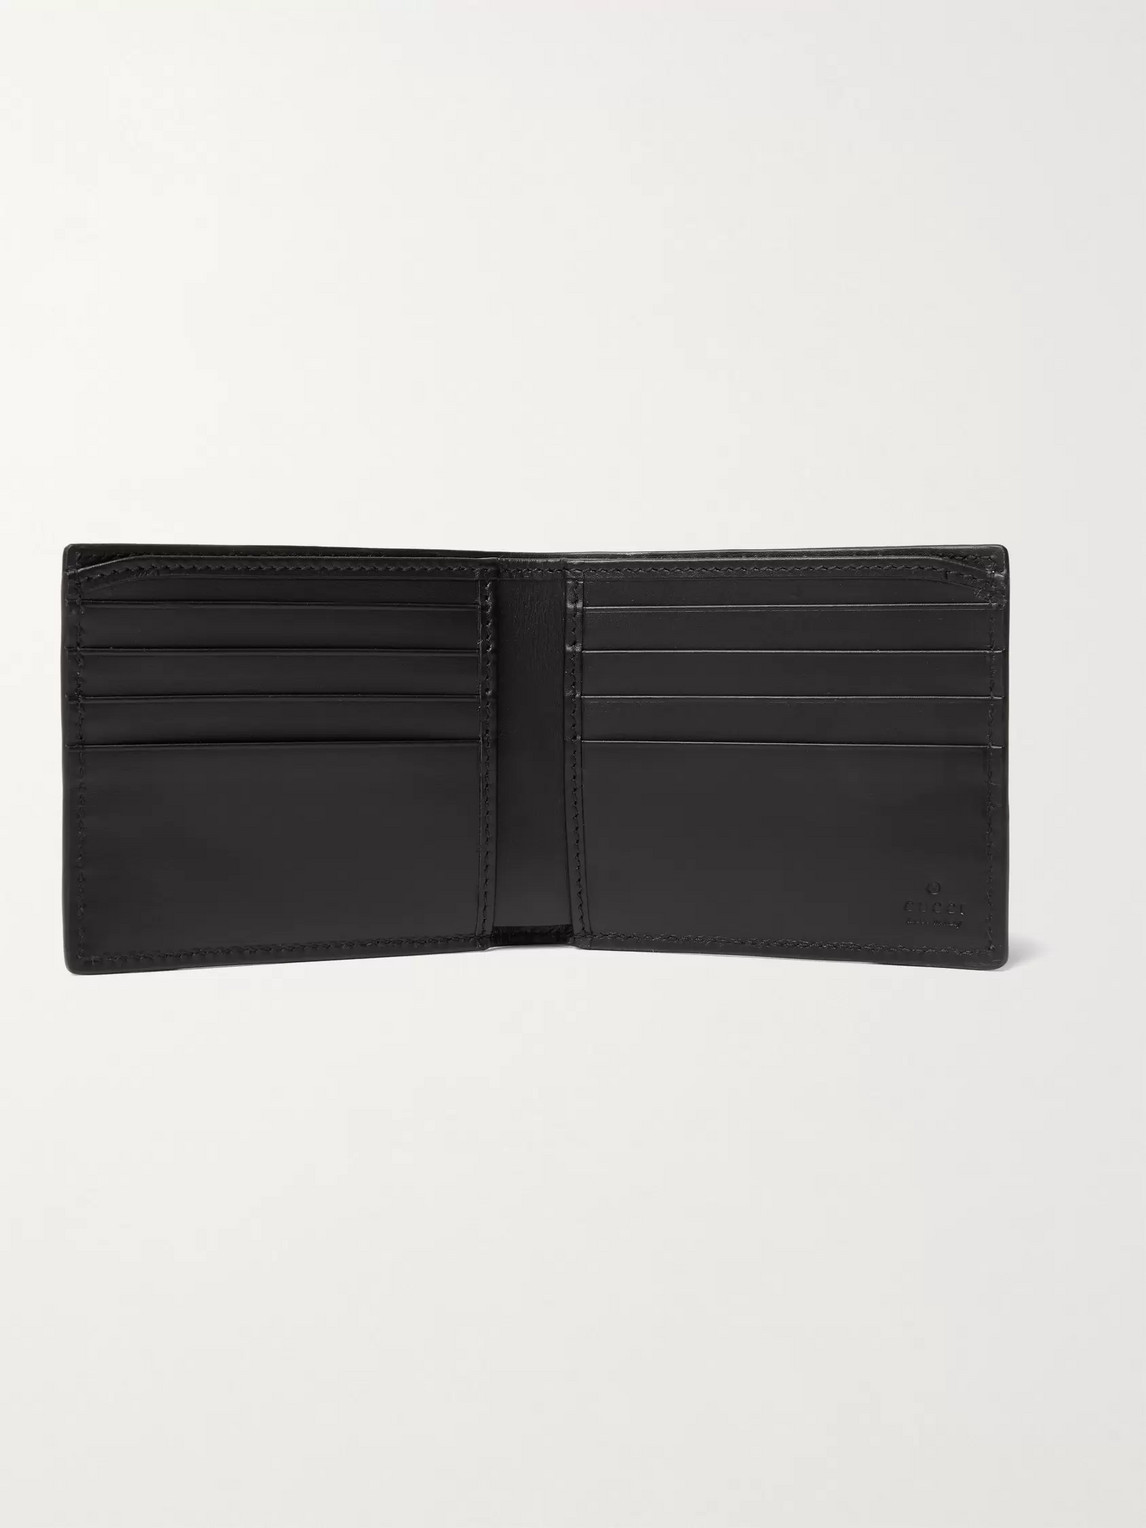 Gucci Kingsnake print GG Supreme wallet  Portafogli da uomo, Portafoglio,  Portafogli